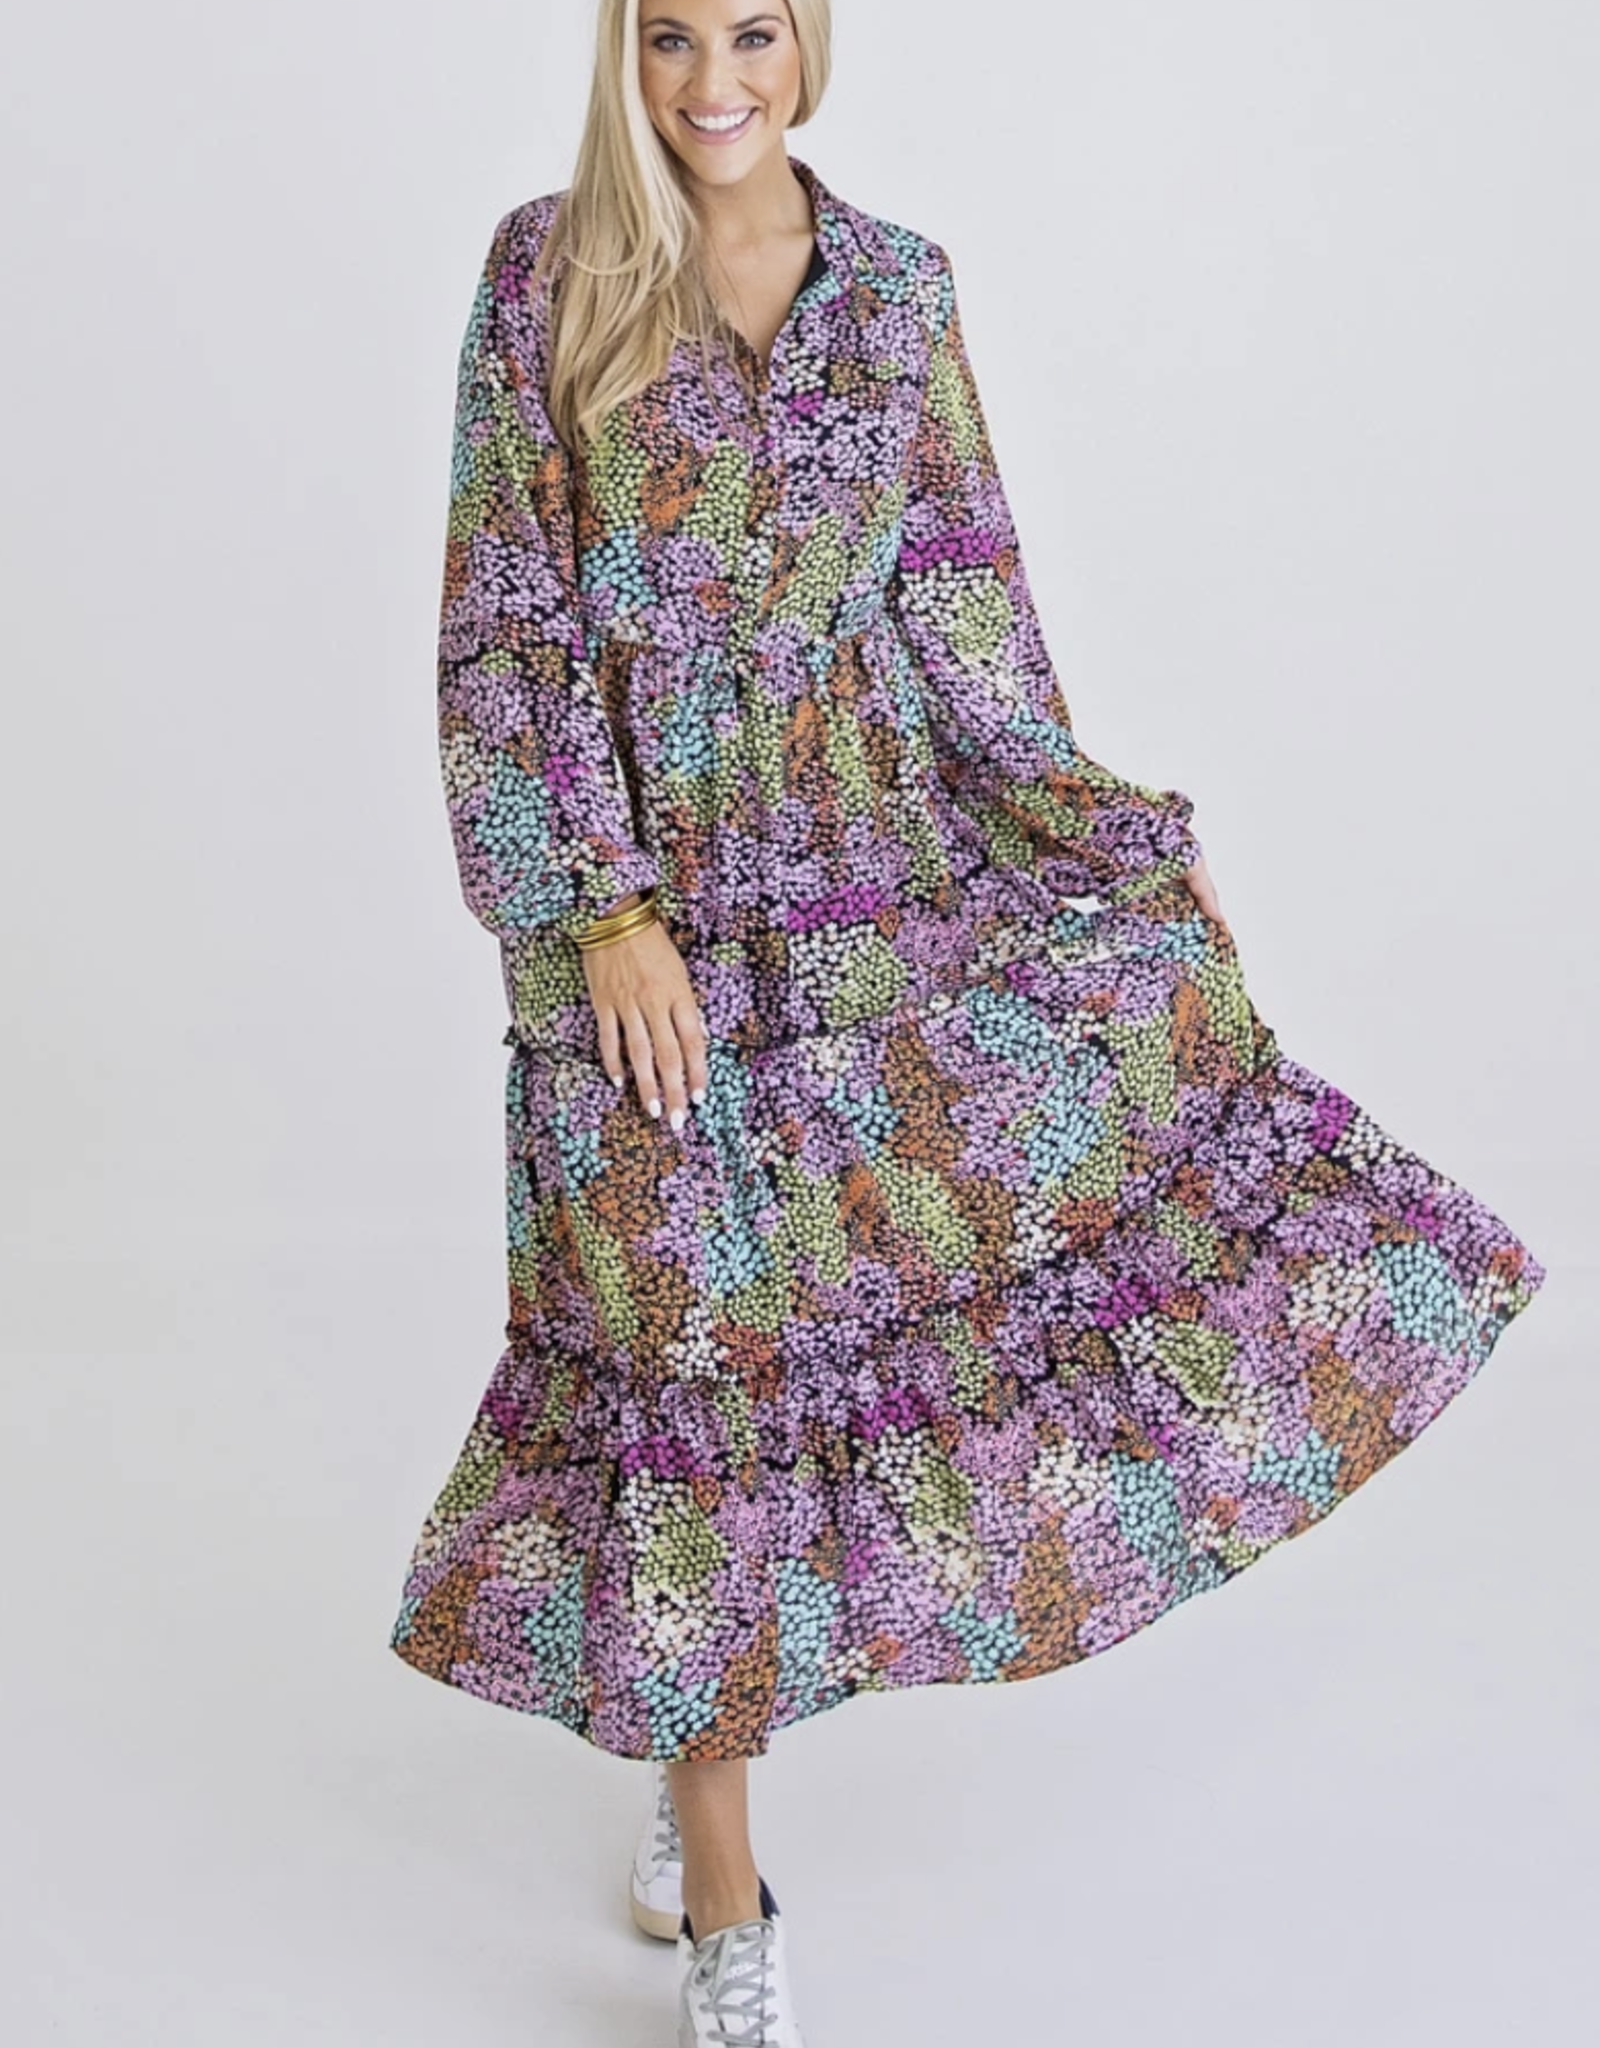 Karlie Floral Tier Button Maxi Dress